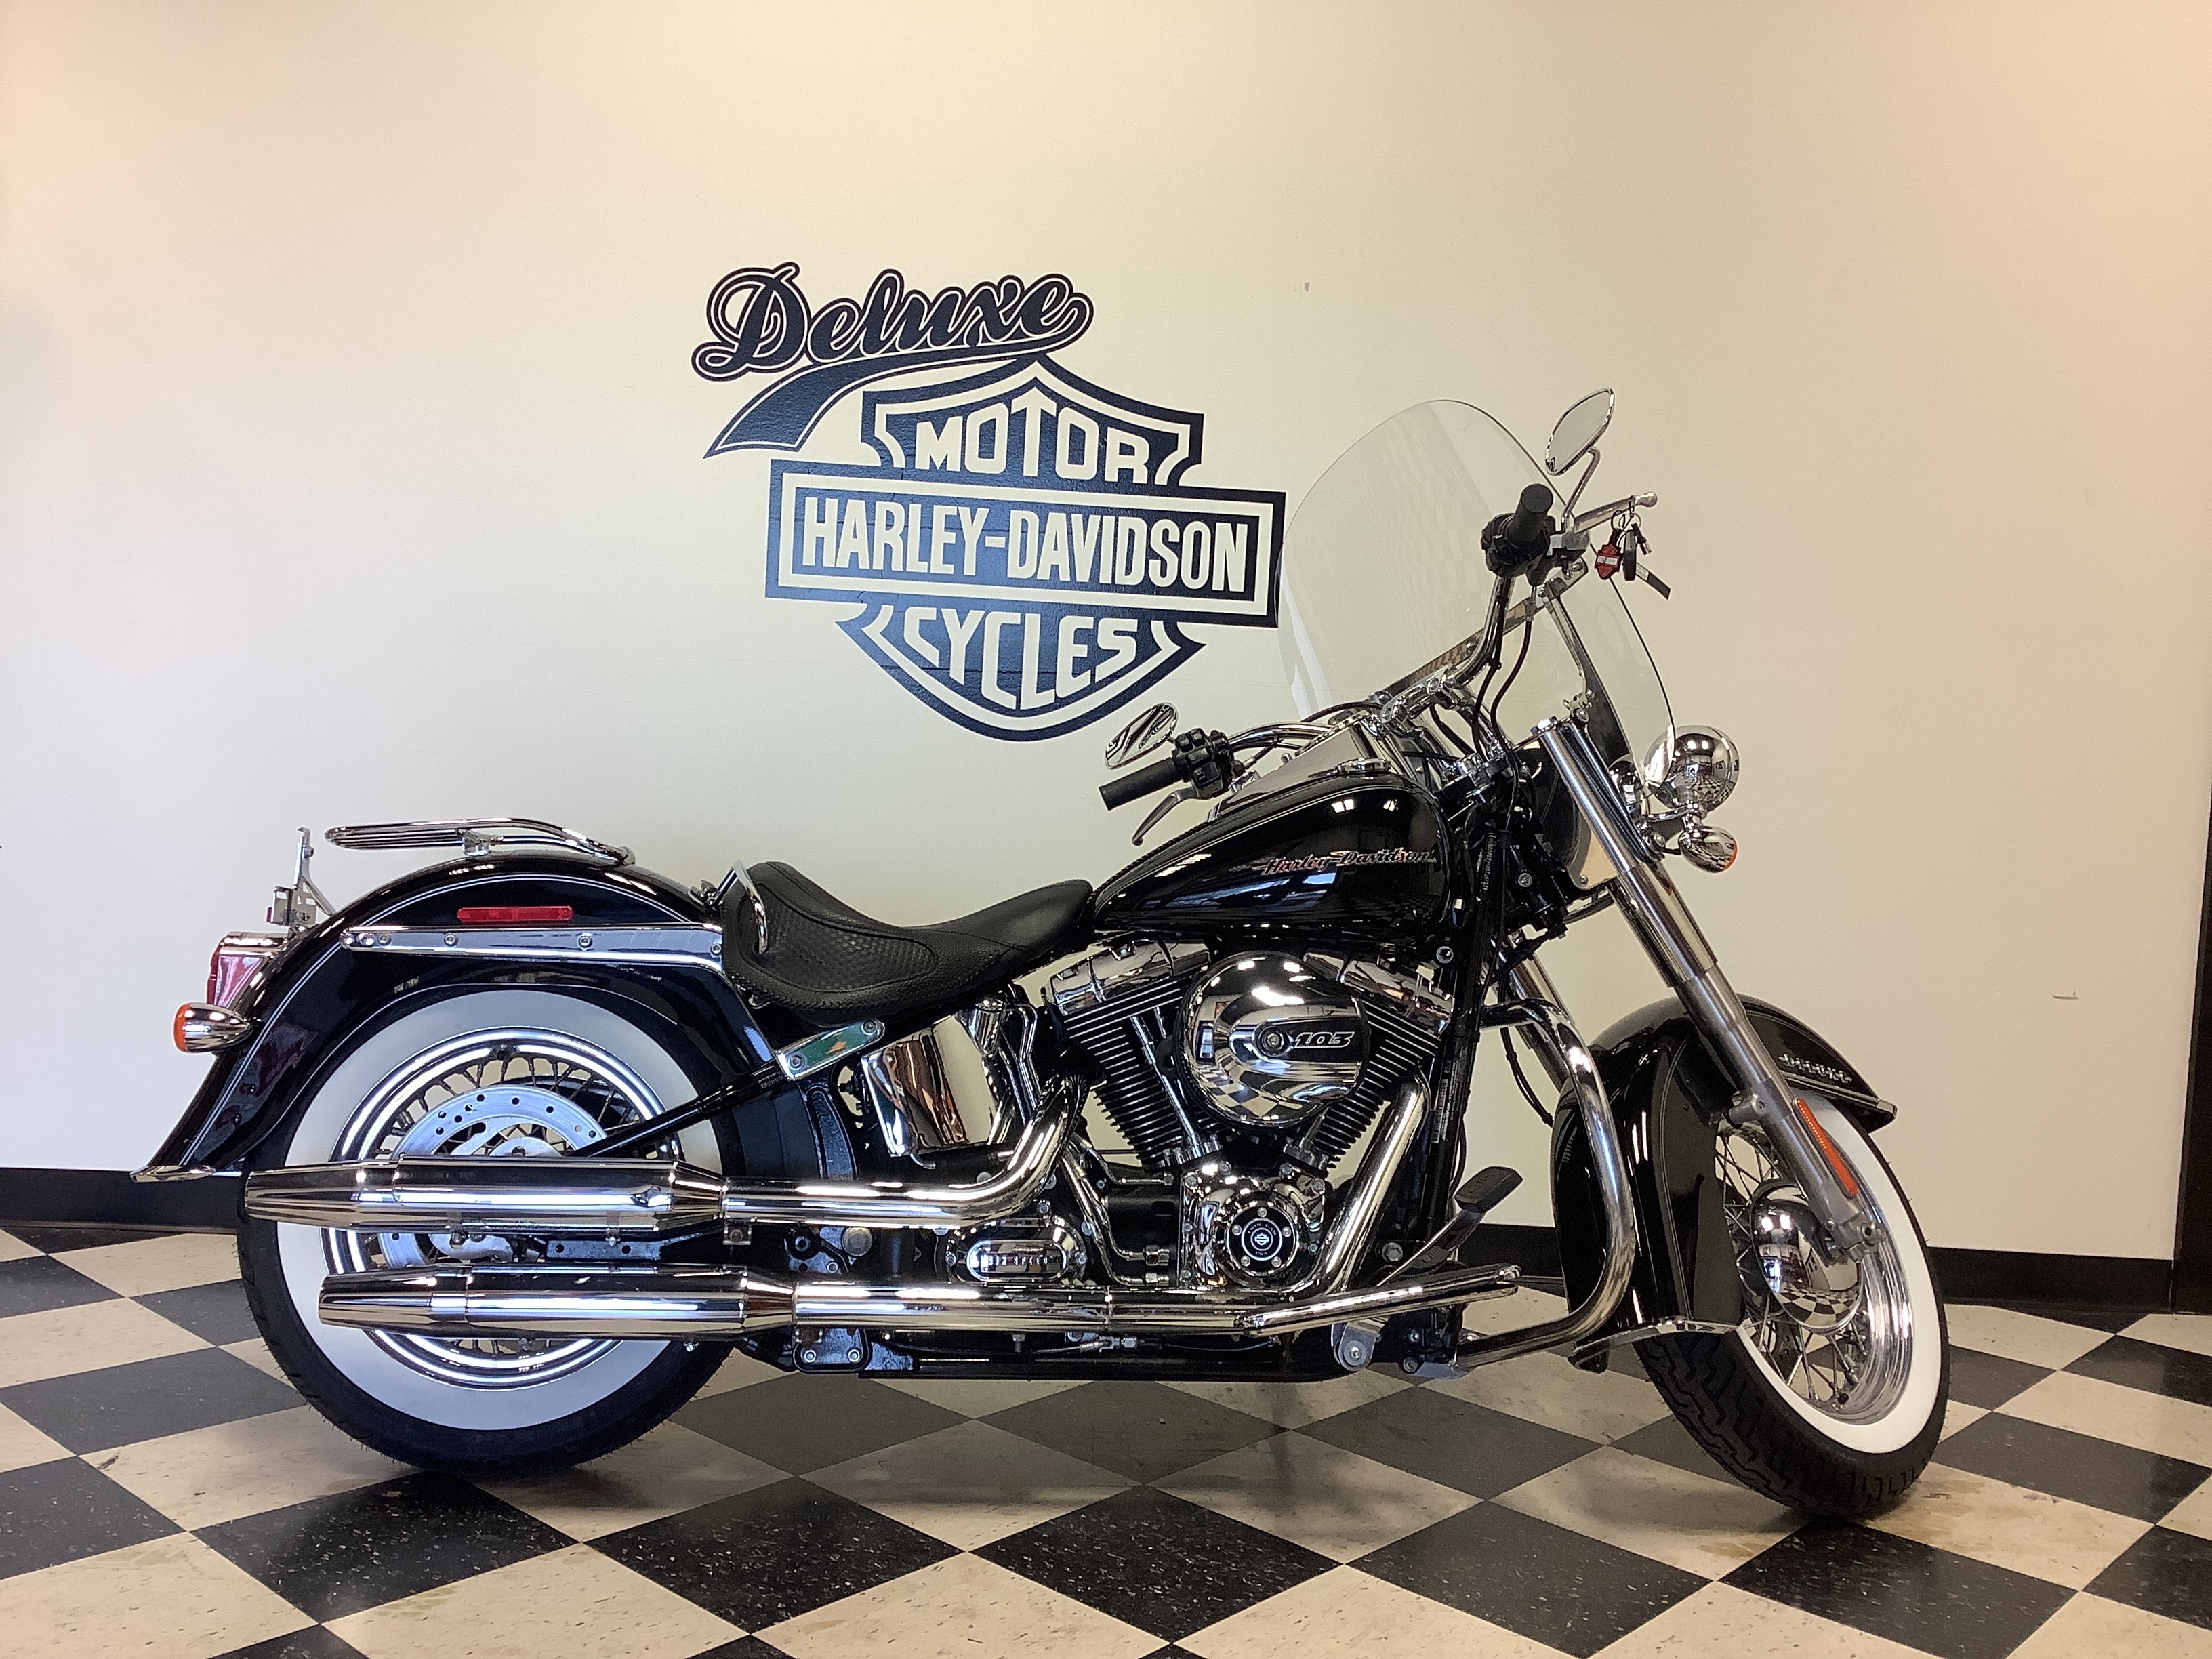 2017 Harley-Davidson Softail Deluxe at Deluxe Harley Davidson